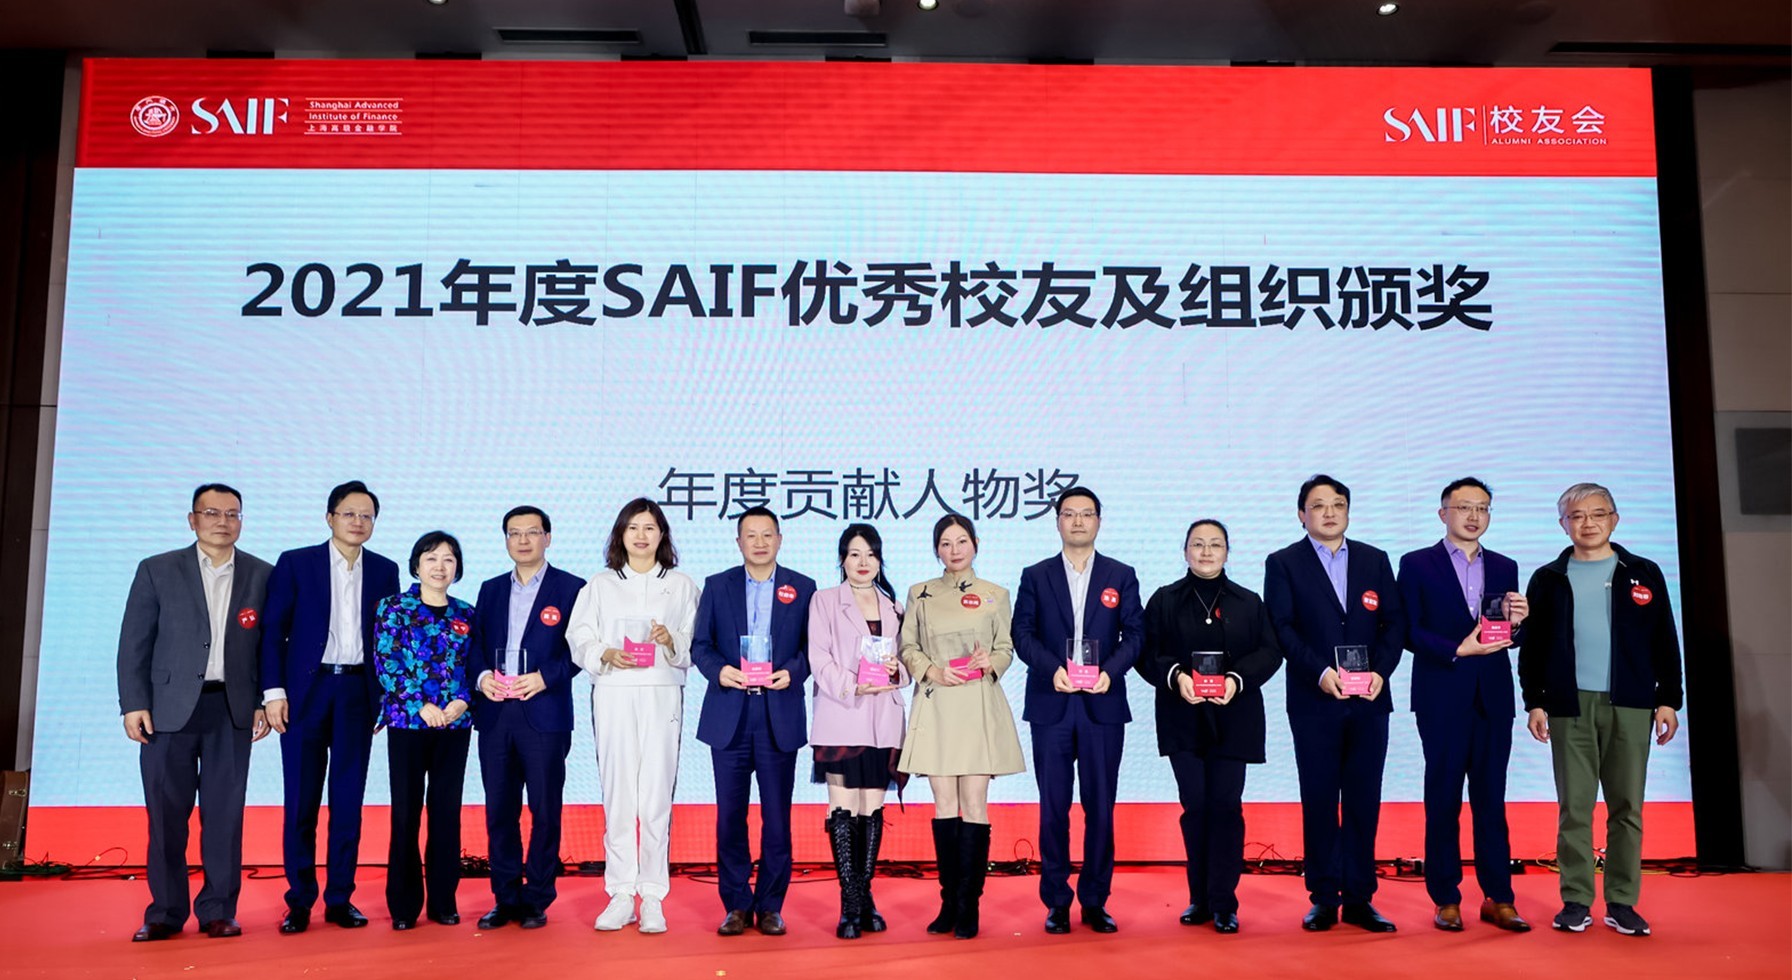 Cao Yalian, Chairman of Sixunited Intelligent, Won 2021 Gaojin Alumni Annual Contribution Award